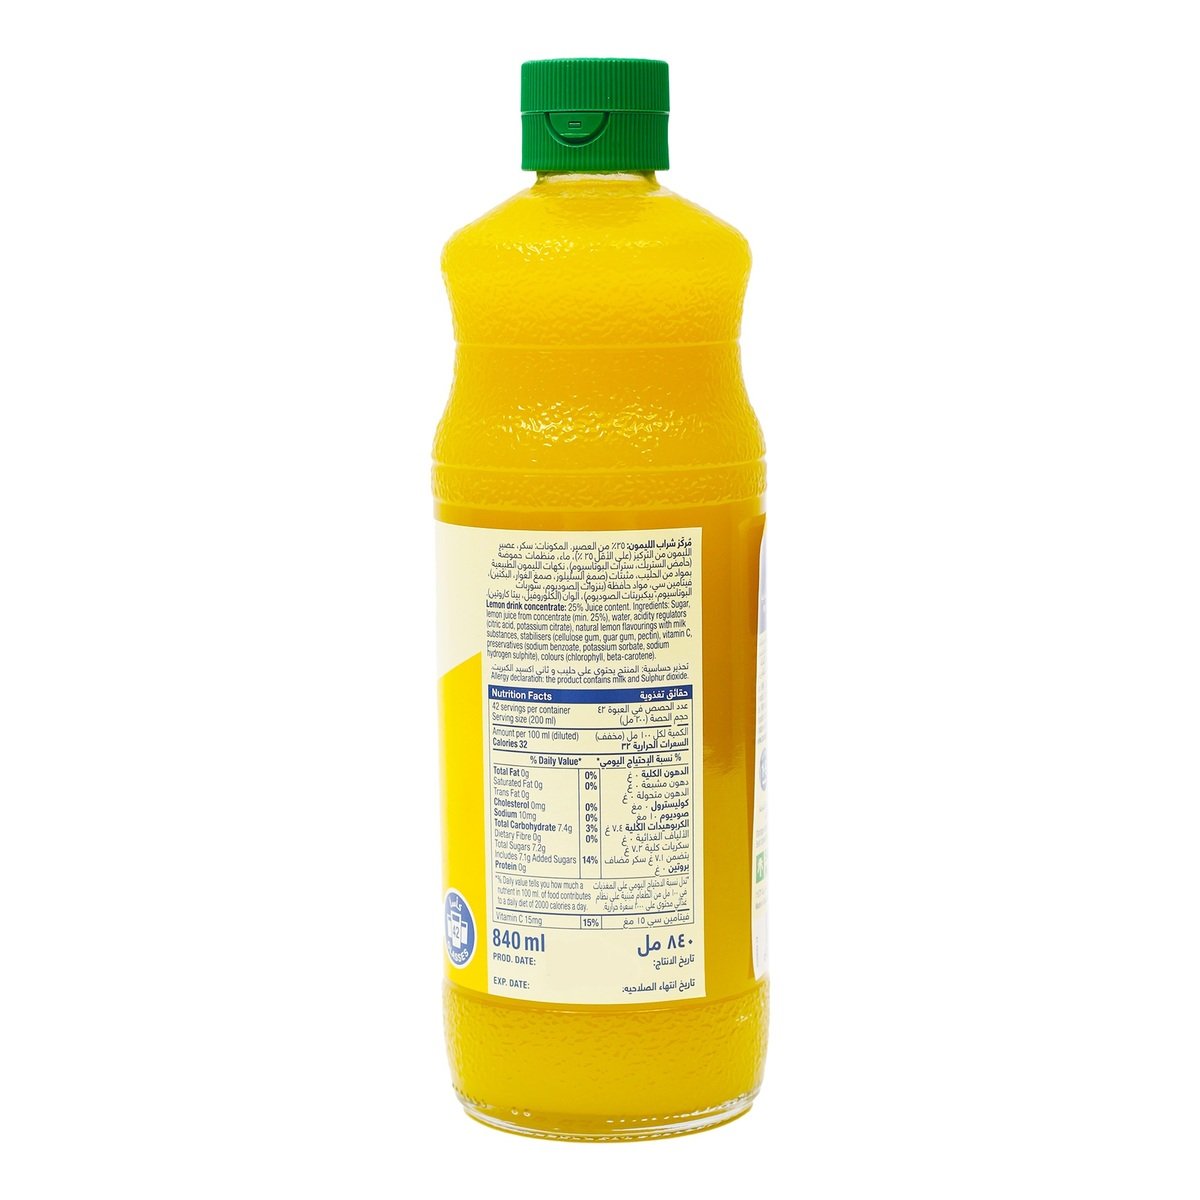 Sunquick Lemon Drink Concentrate 840 ml